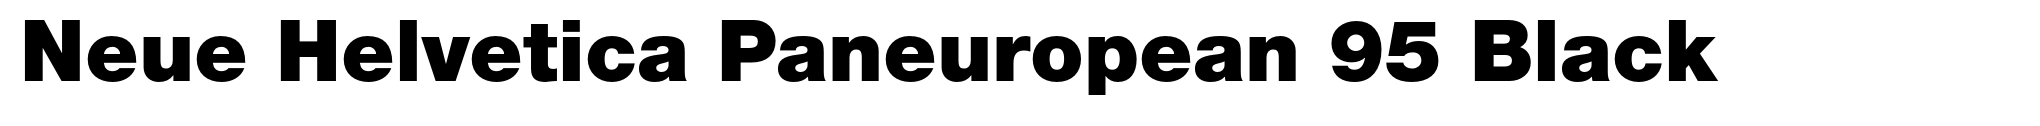 Neue Helvetica Paneuropean 95 Black image